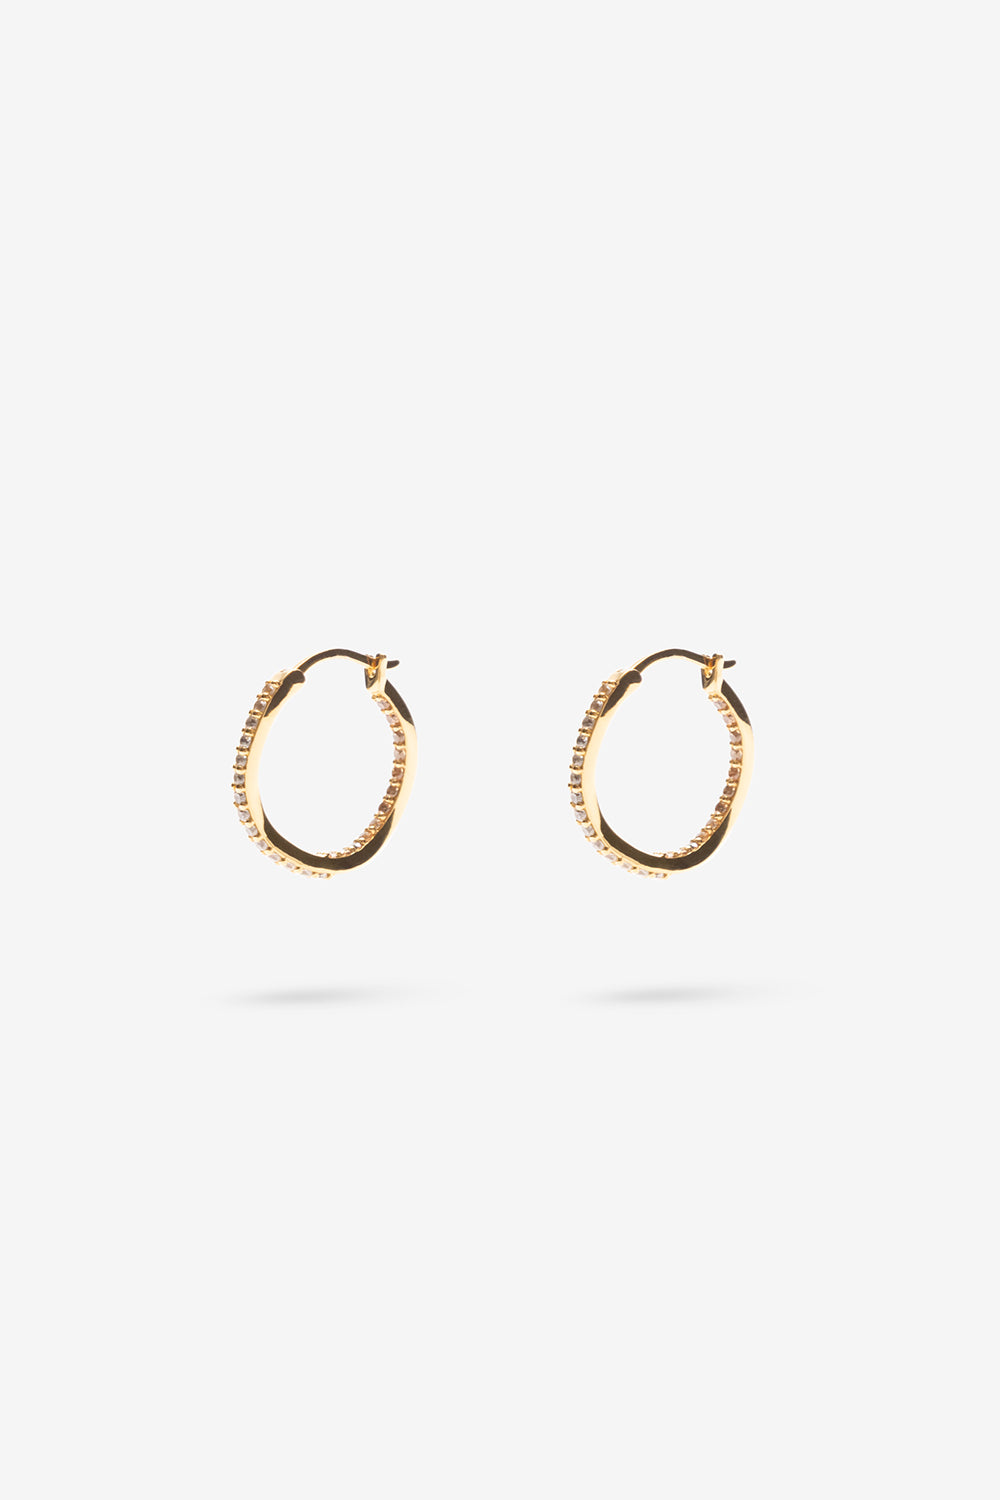 Flash Jewellery Jaunt Paved Hoop Earrings with Champagne coloured gemstones in 14k Gold Vermeil 